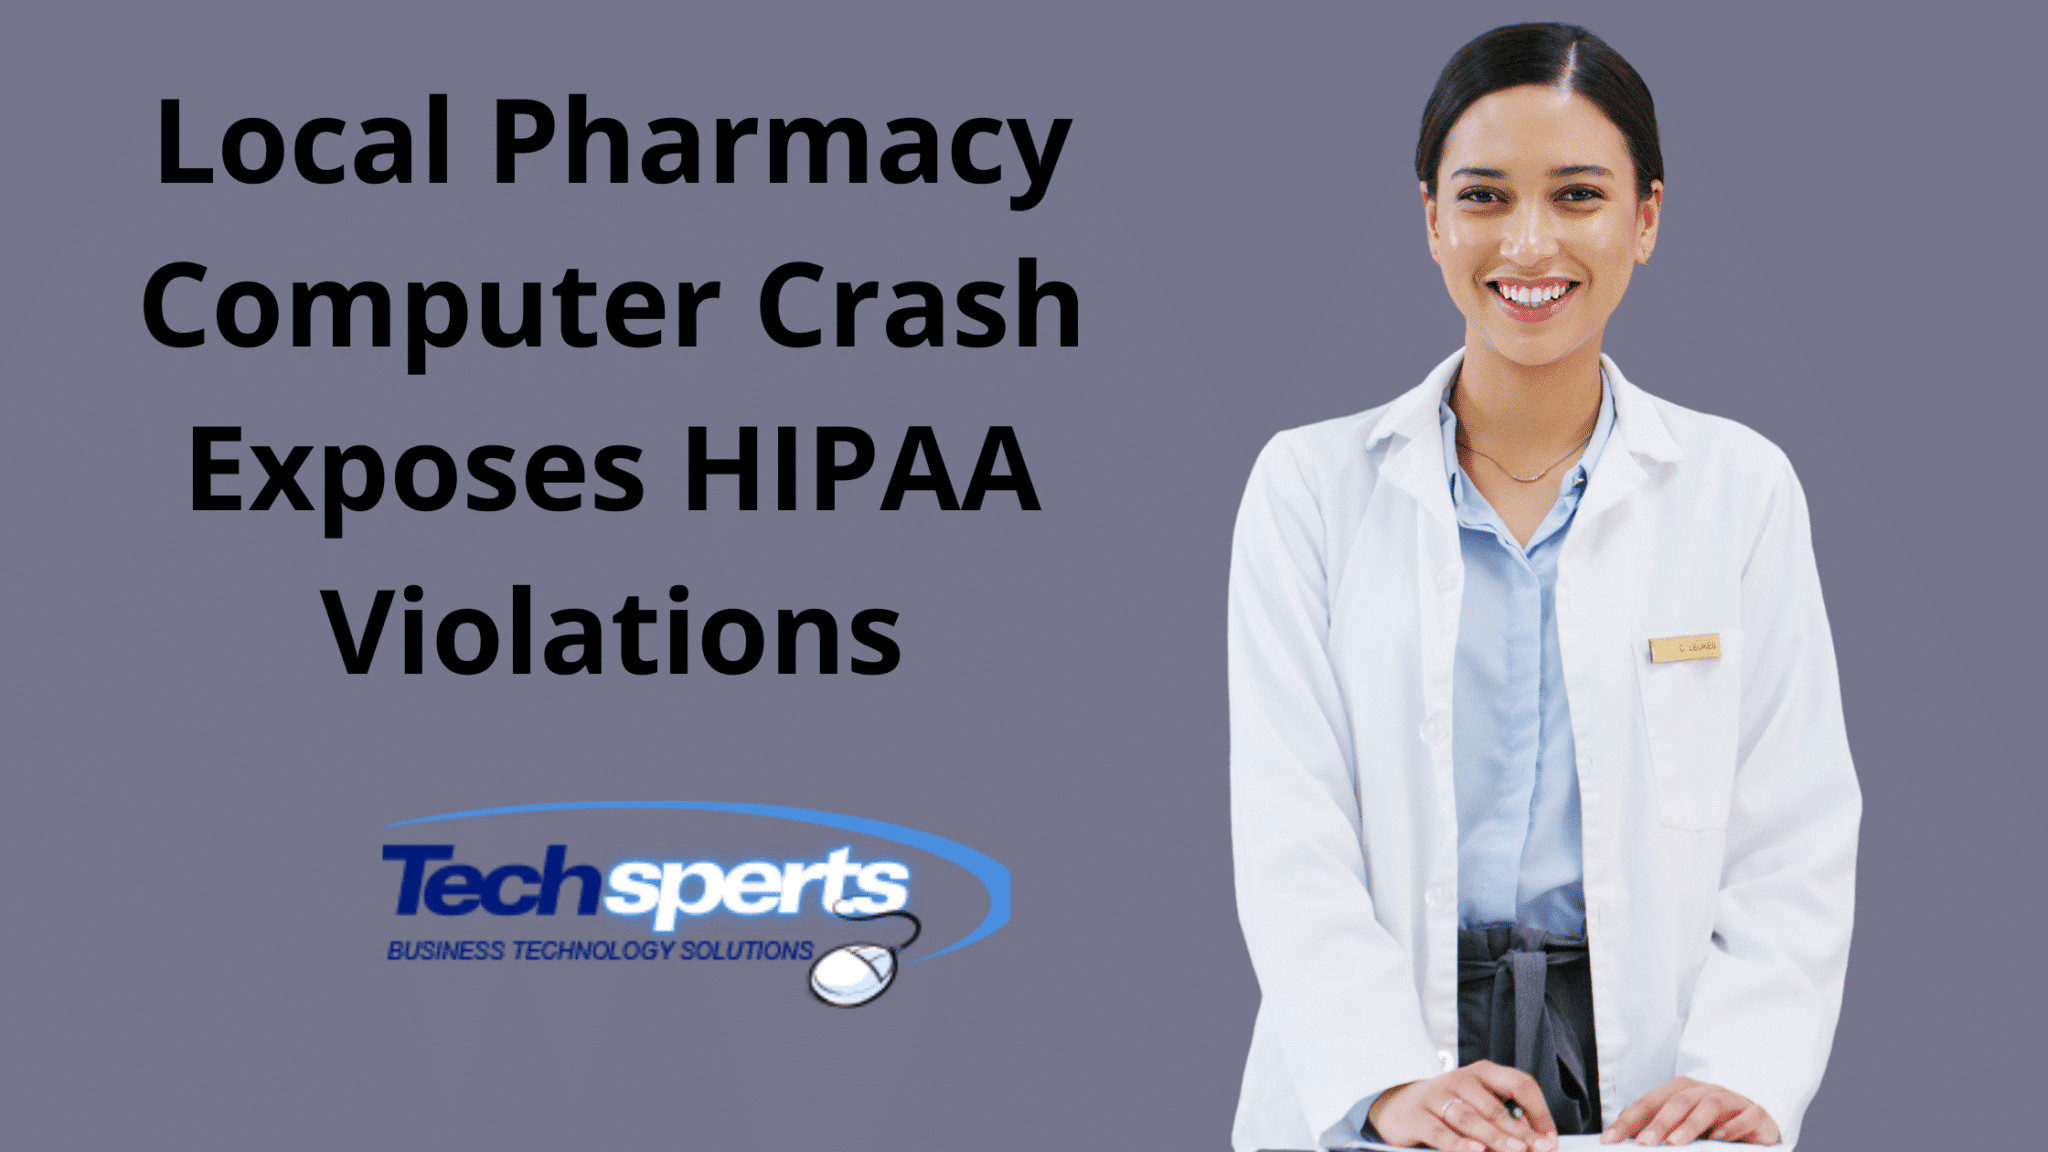 Local Pharmacy Computer Crash Exposes HIPAA Violations